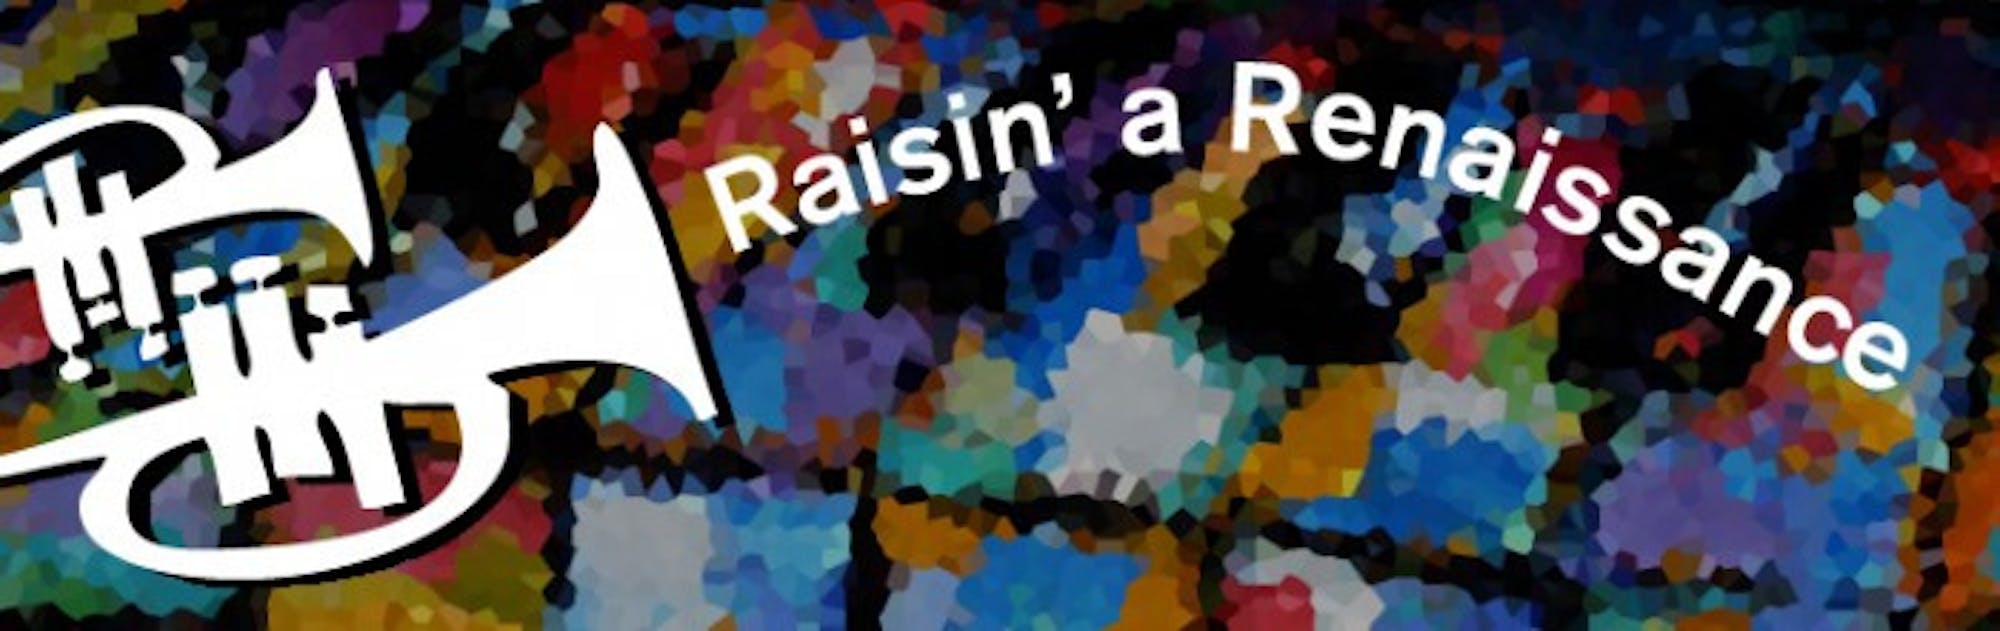 web_raisin a renaissance